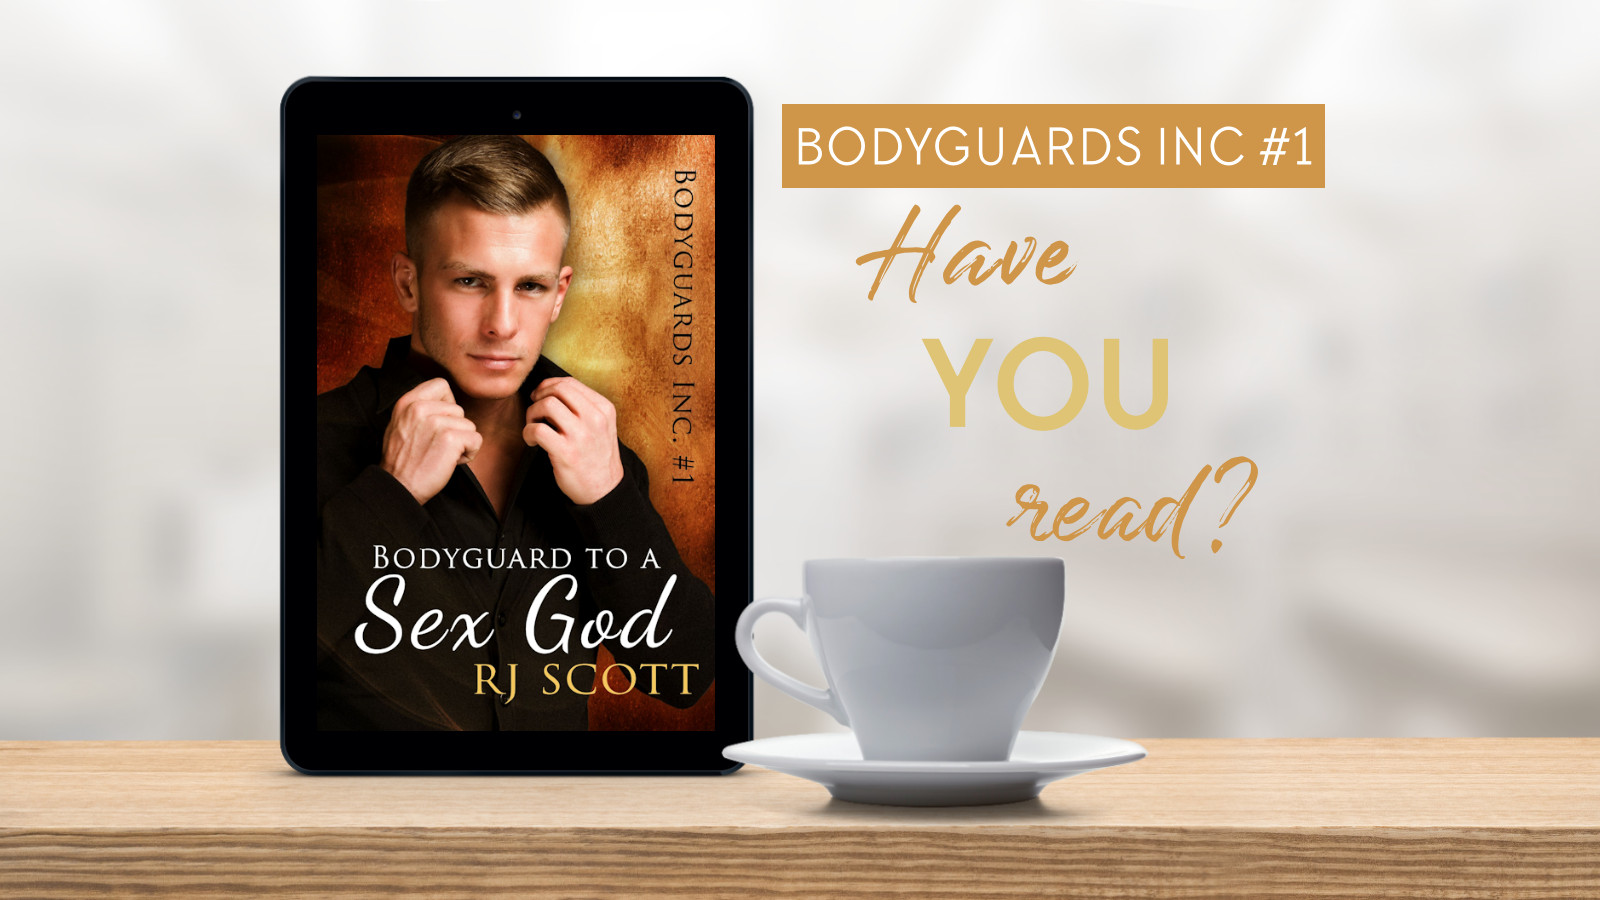 Have you read Bodyguards Inc MMRomance RJ Scott